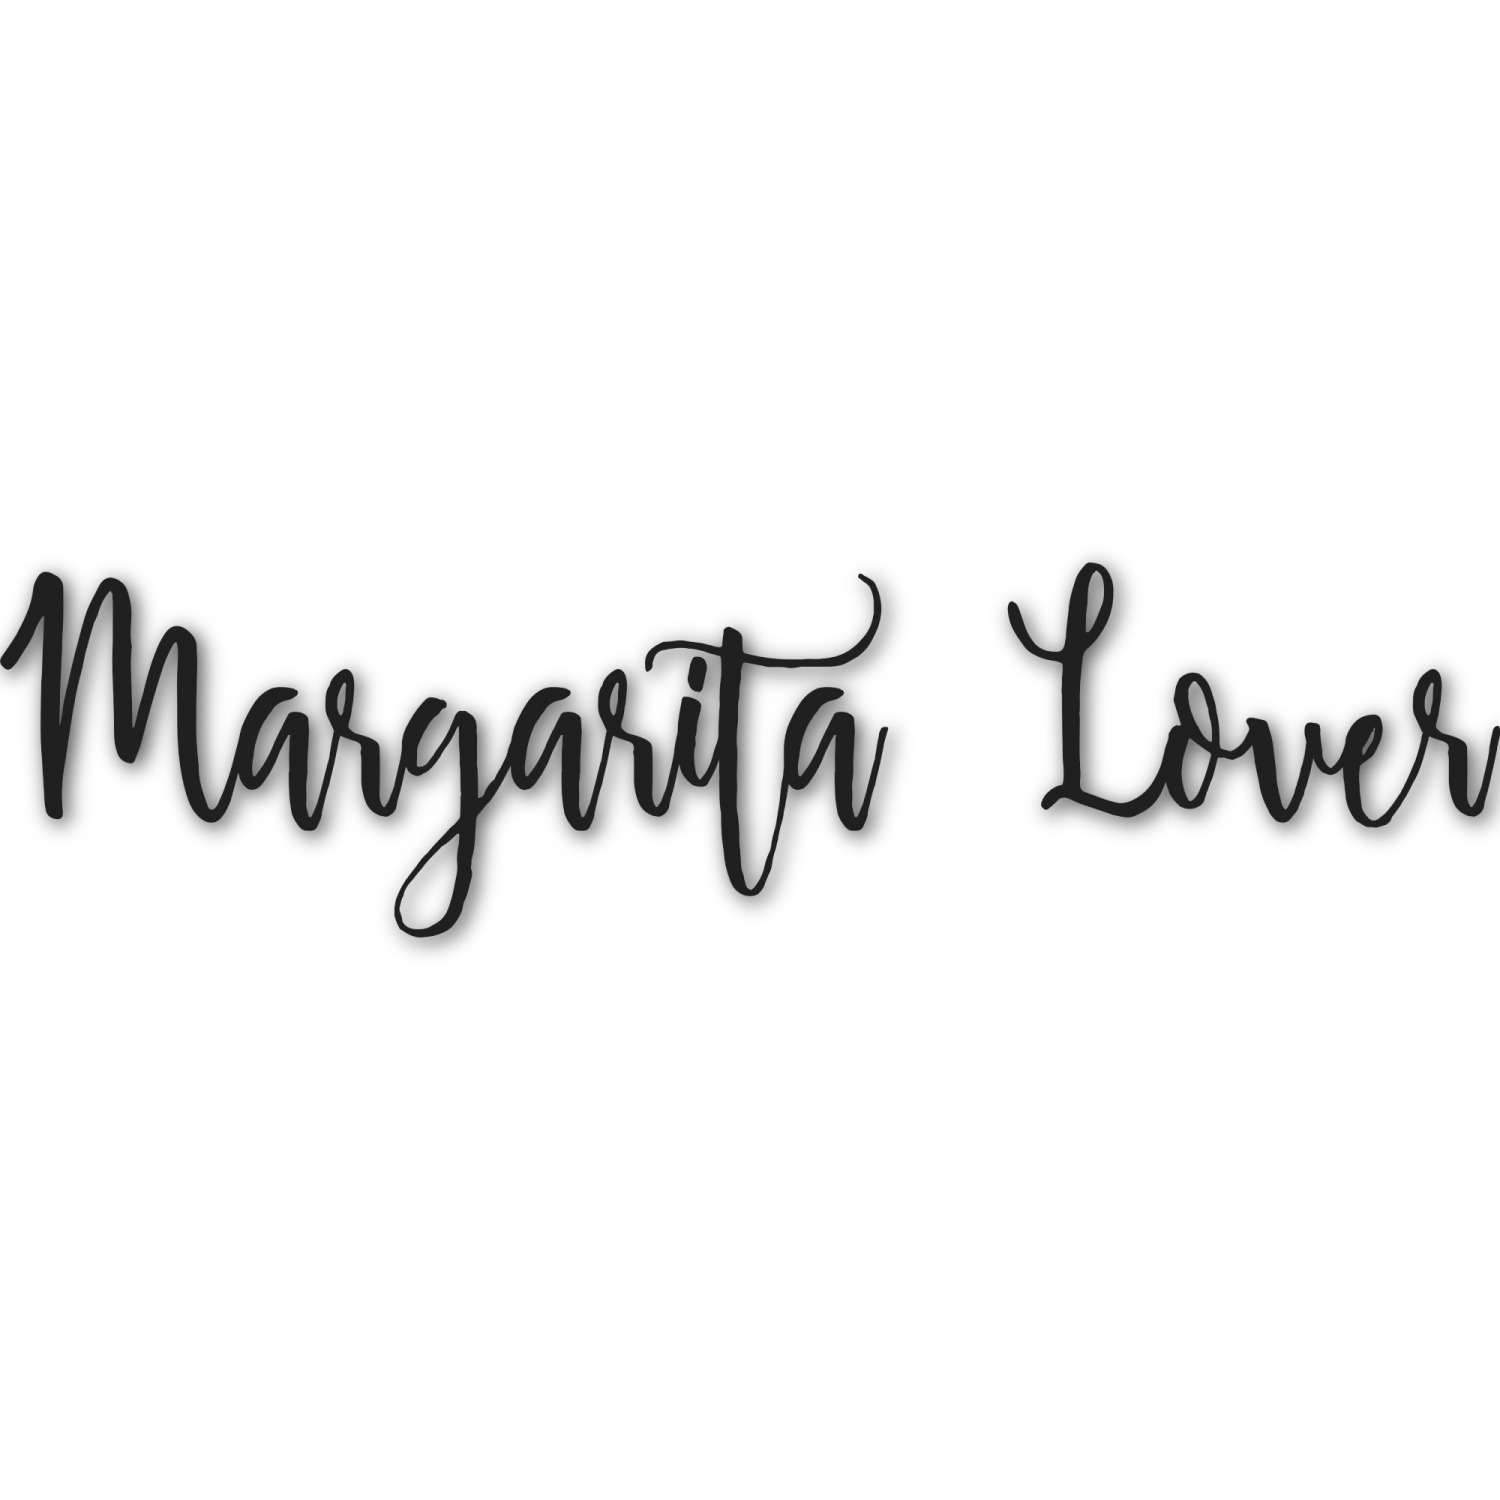 Custom Margarita Lover Nametext Decal Small Personalized 